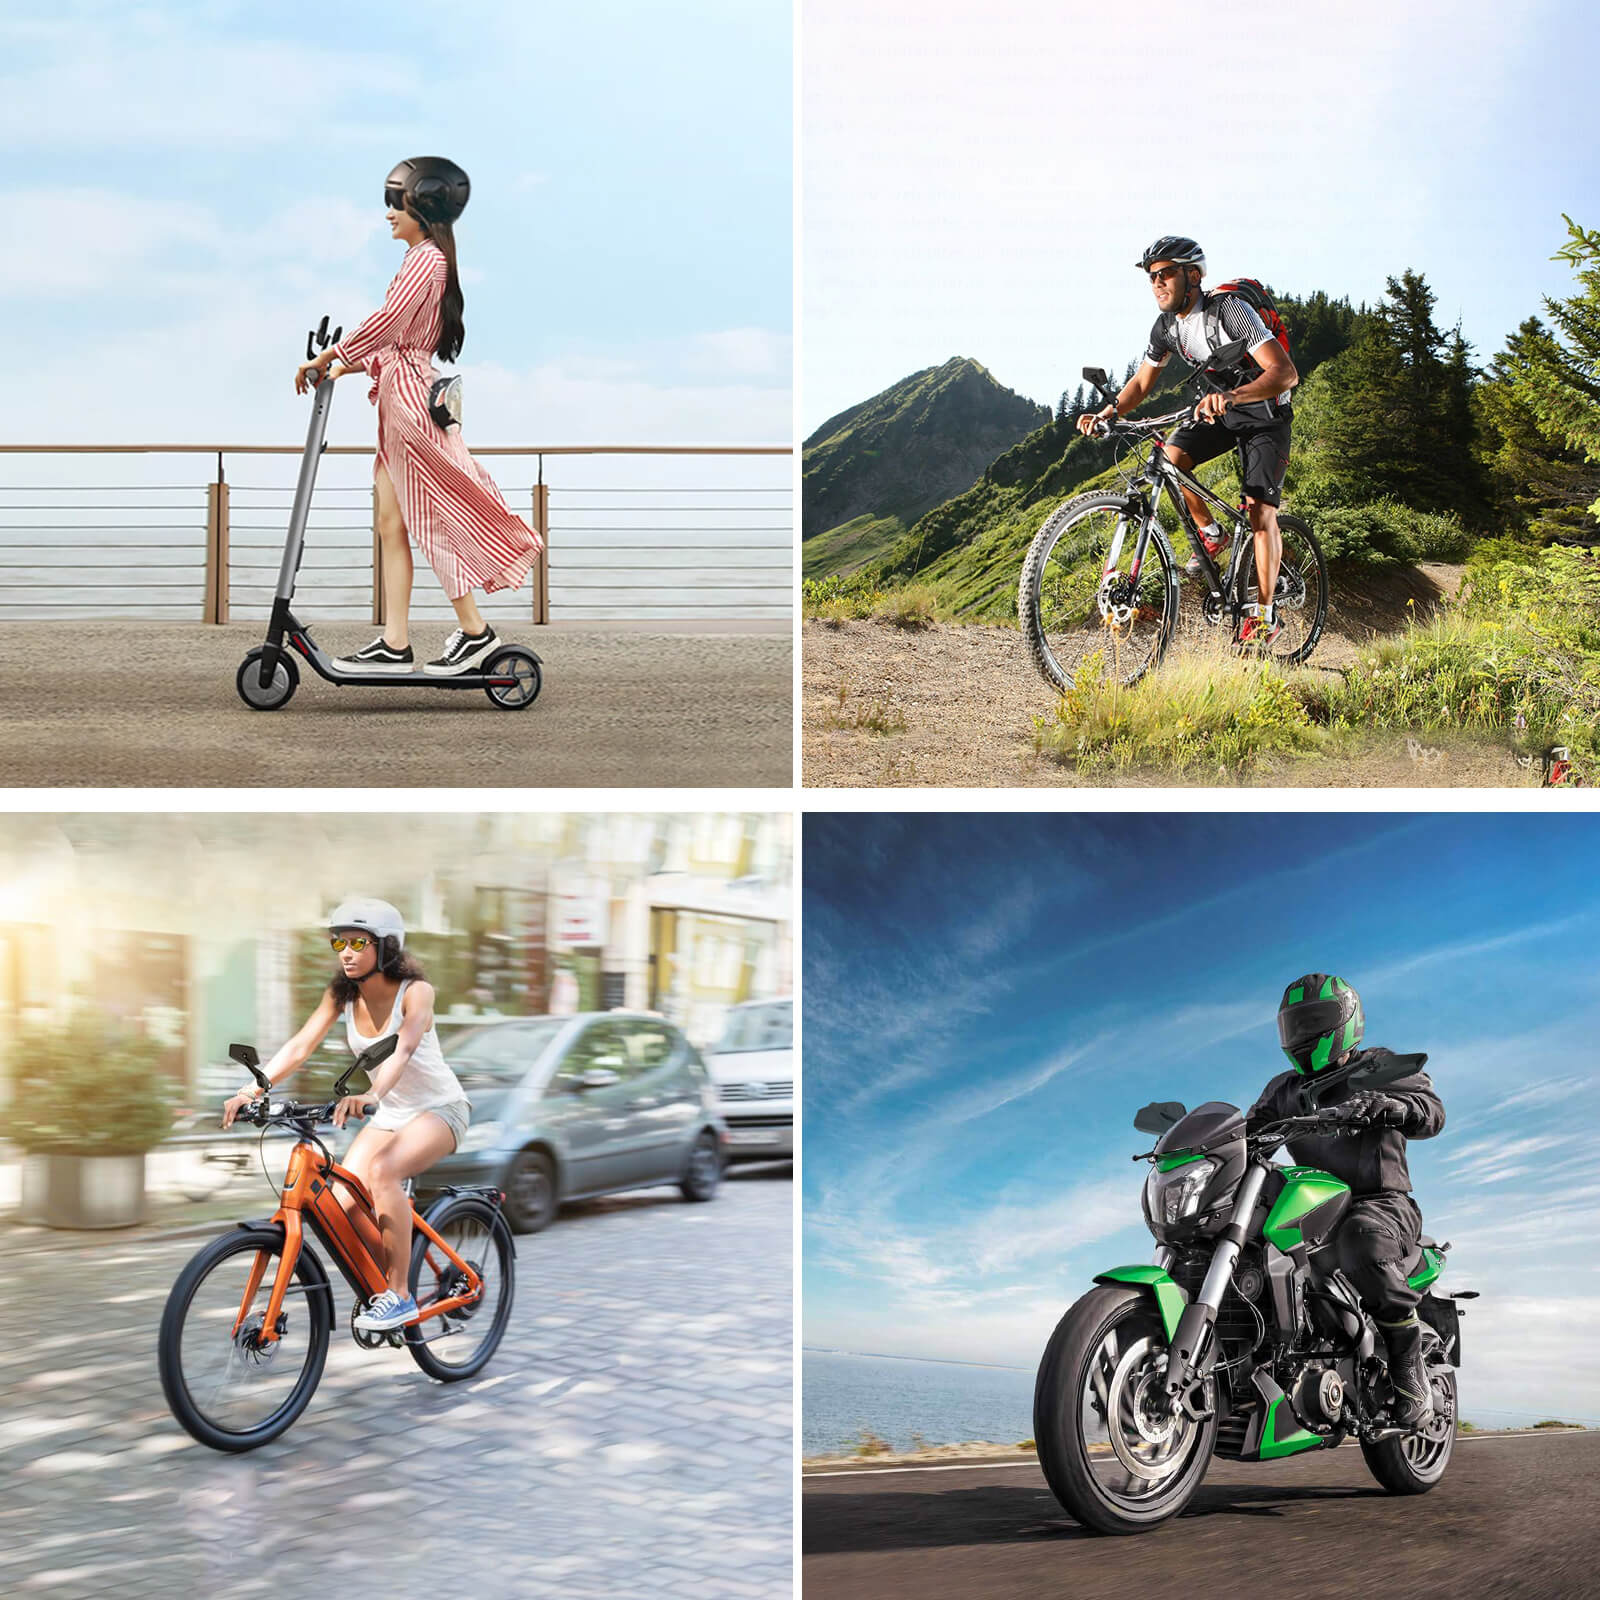 Bike Handlebar Mirror for 22mm-25mm Handlebars, 360 Degree Adjustable Rotatable Wide Angle Bicycle Mirrors